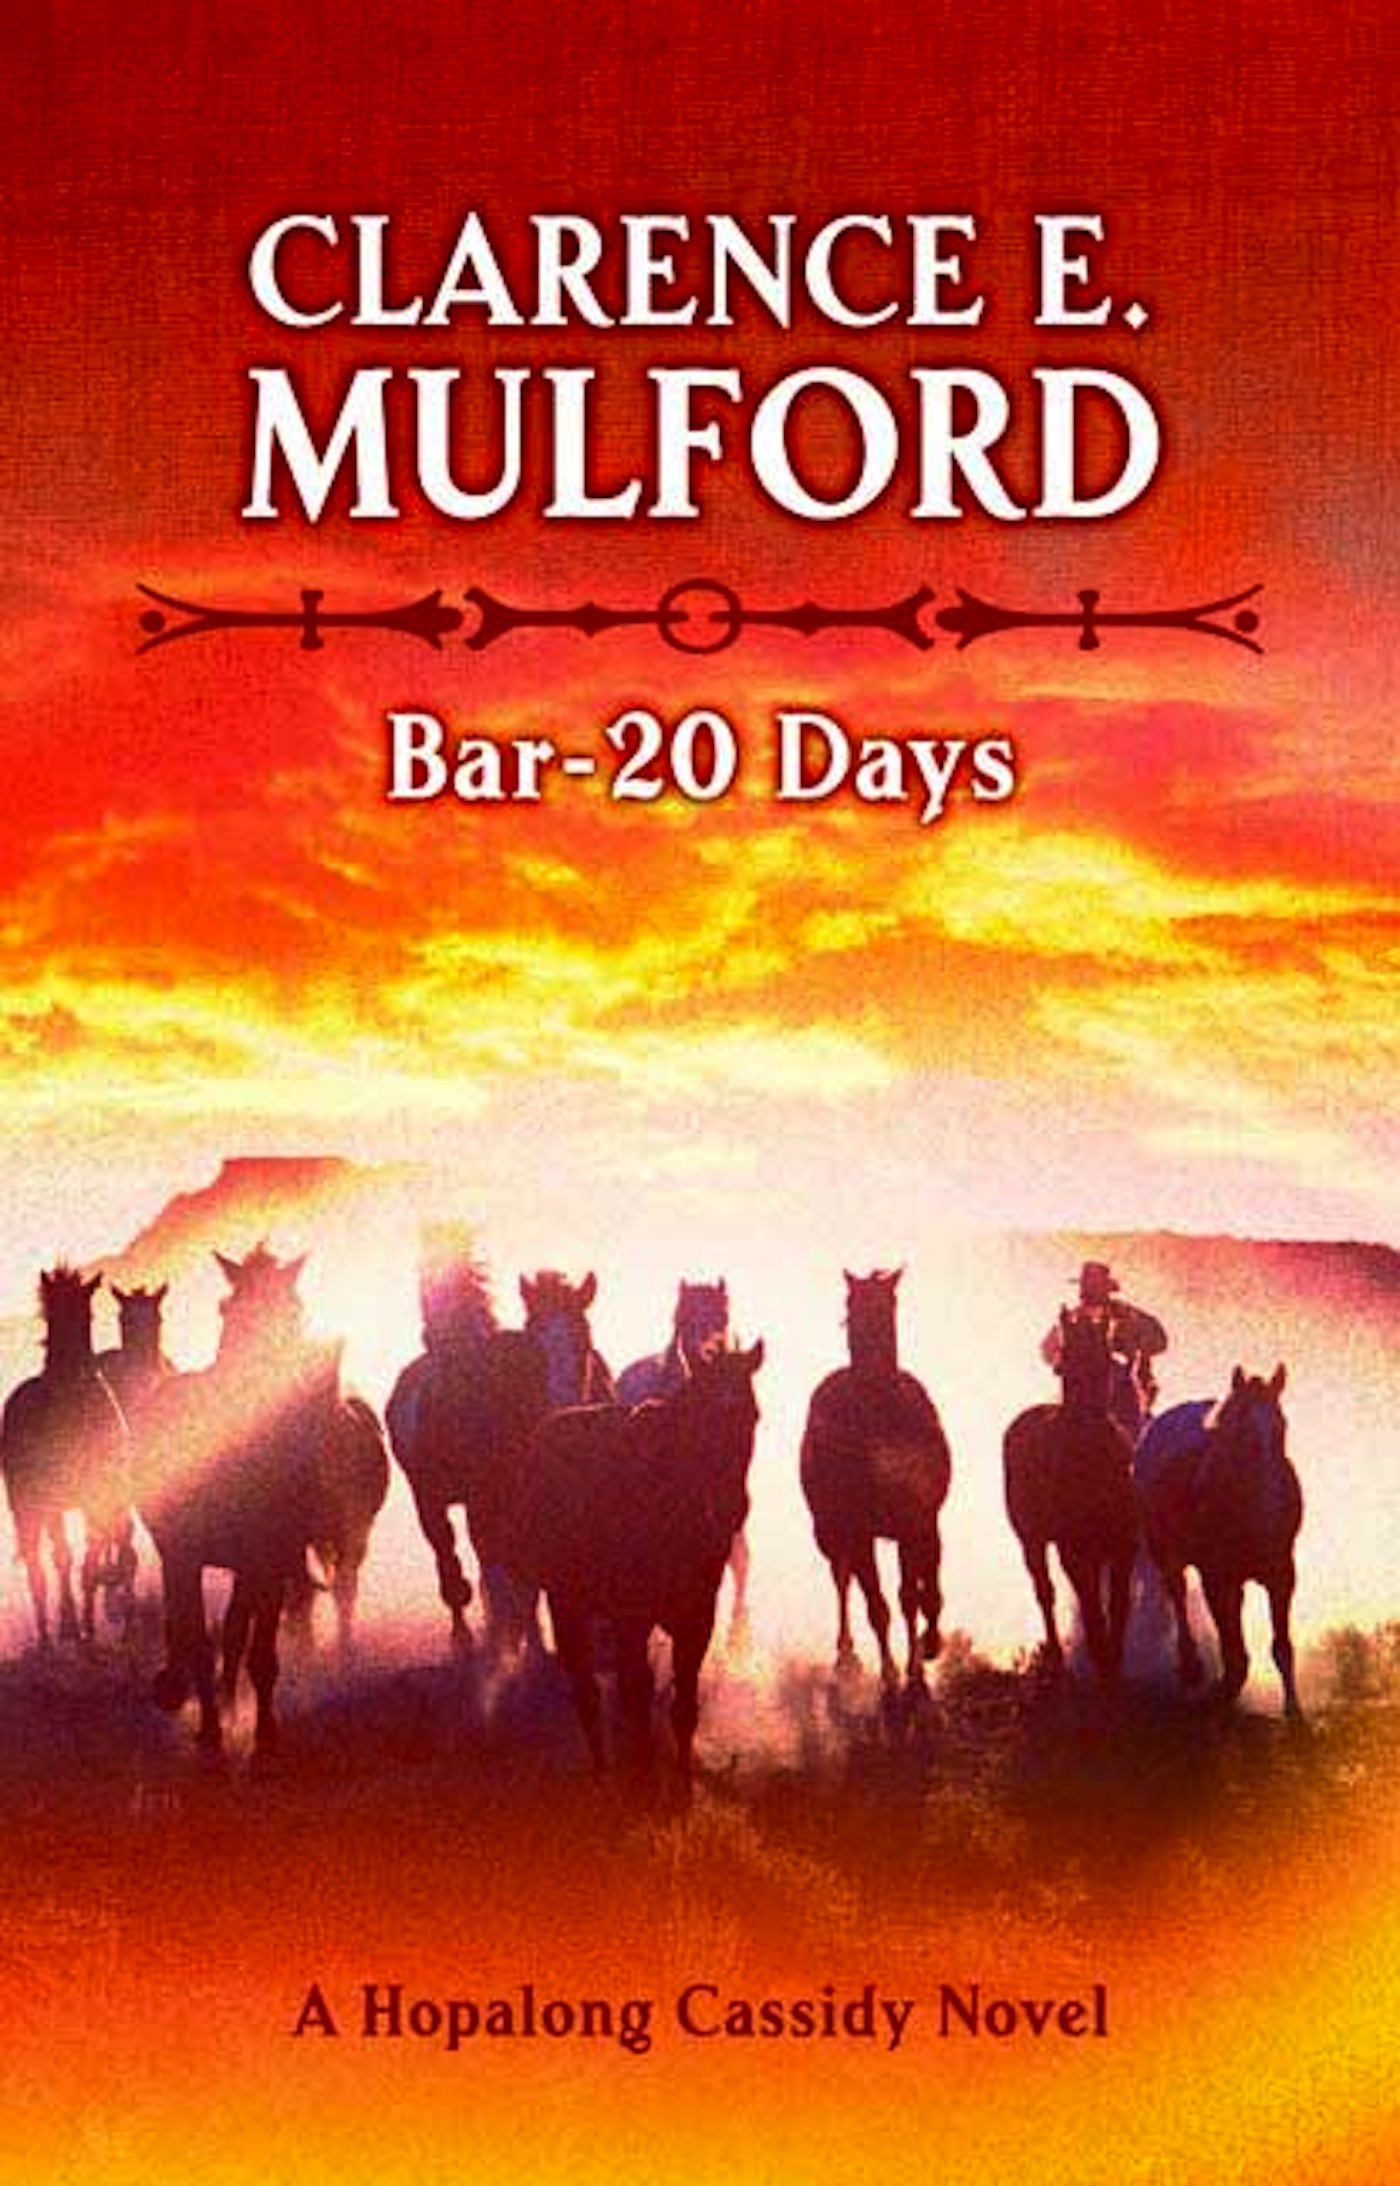 Bar-20 Days : A Hopalong Cassidy Novel by Clarence E. Mulford